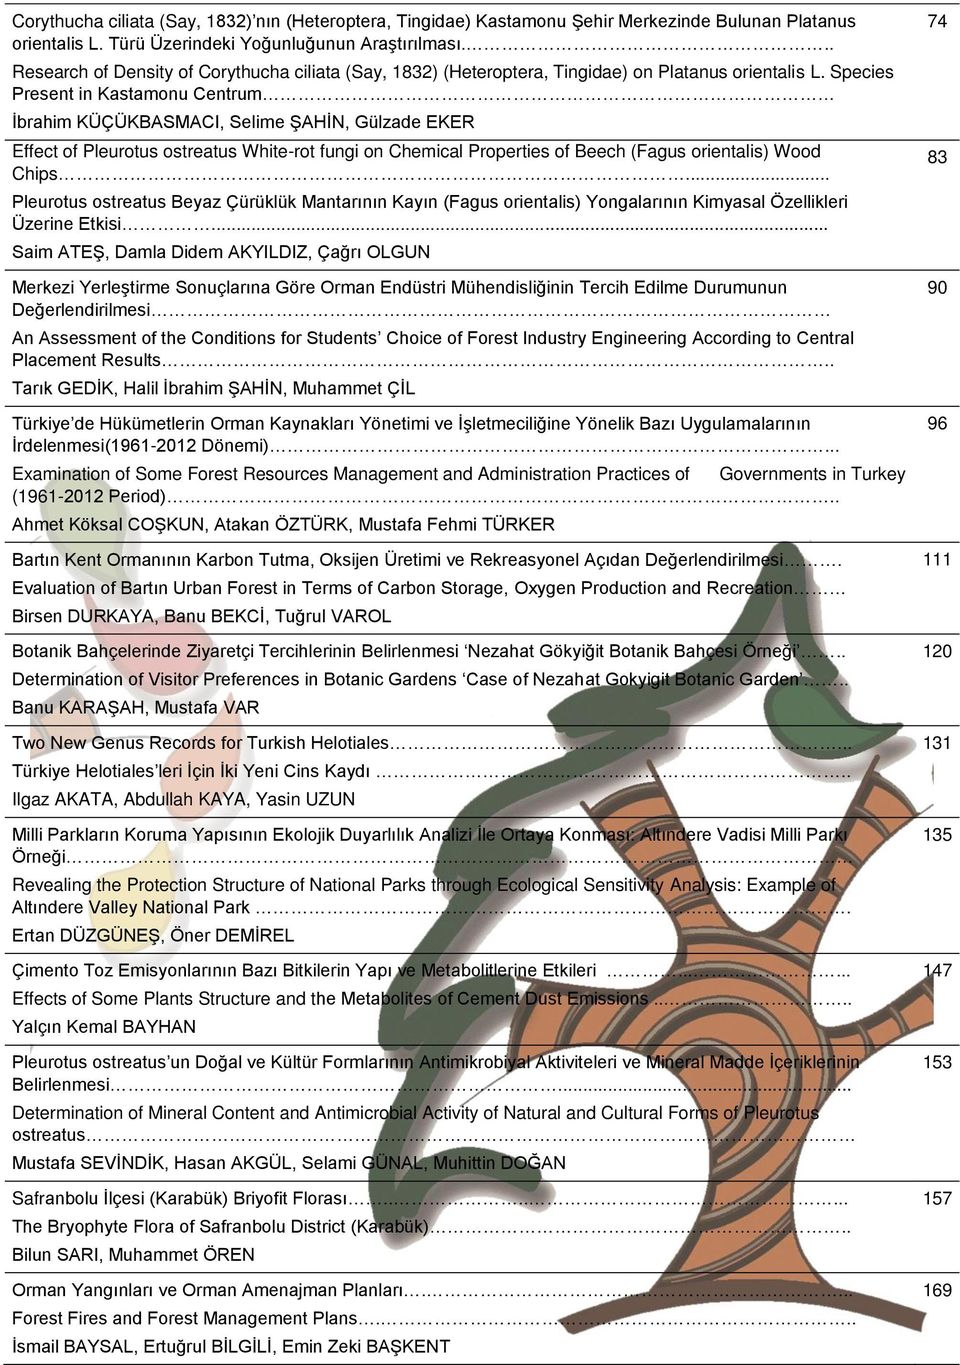 Species Present in Kastamonu Centrum İbrahim KÜÇÜKBASMACI, Selime ŞAHİN, Gülzade EKER Effect of Pleurotus ostreatus White-rot fungi on Chemical Properties of Beech (Fagus orientalis) Wood Chips.